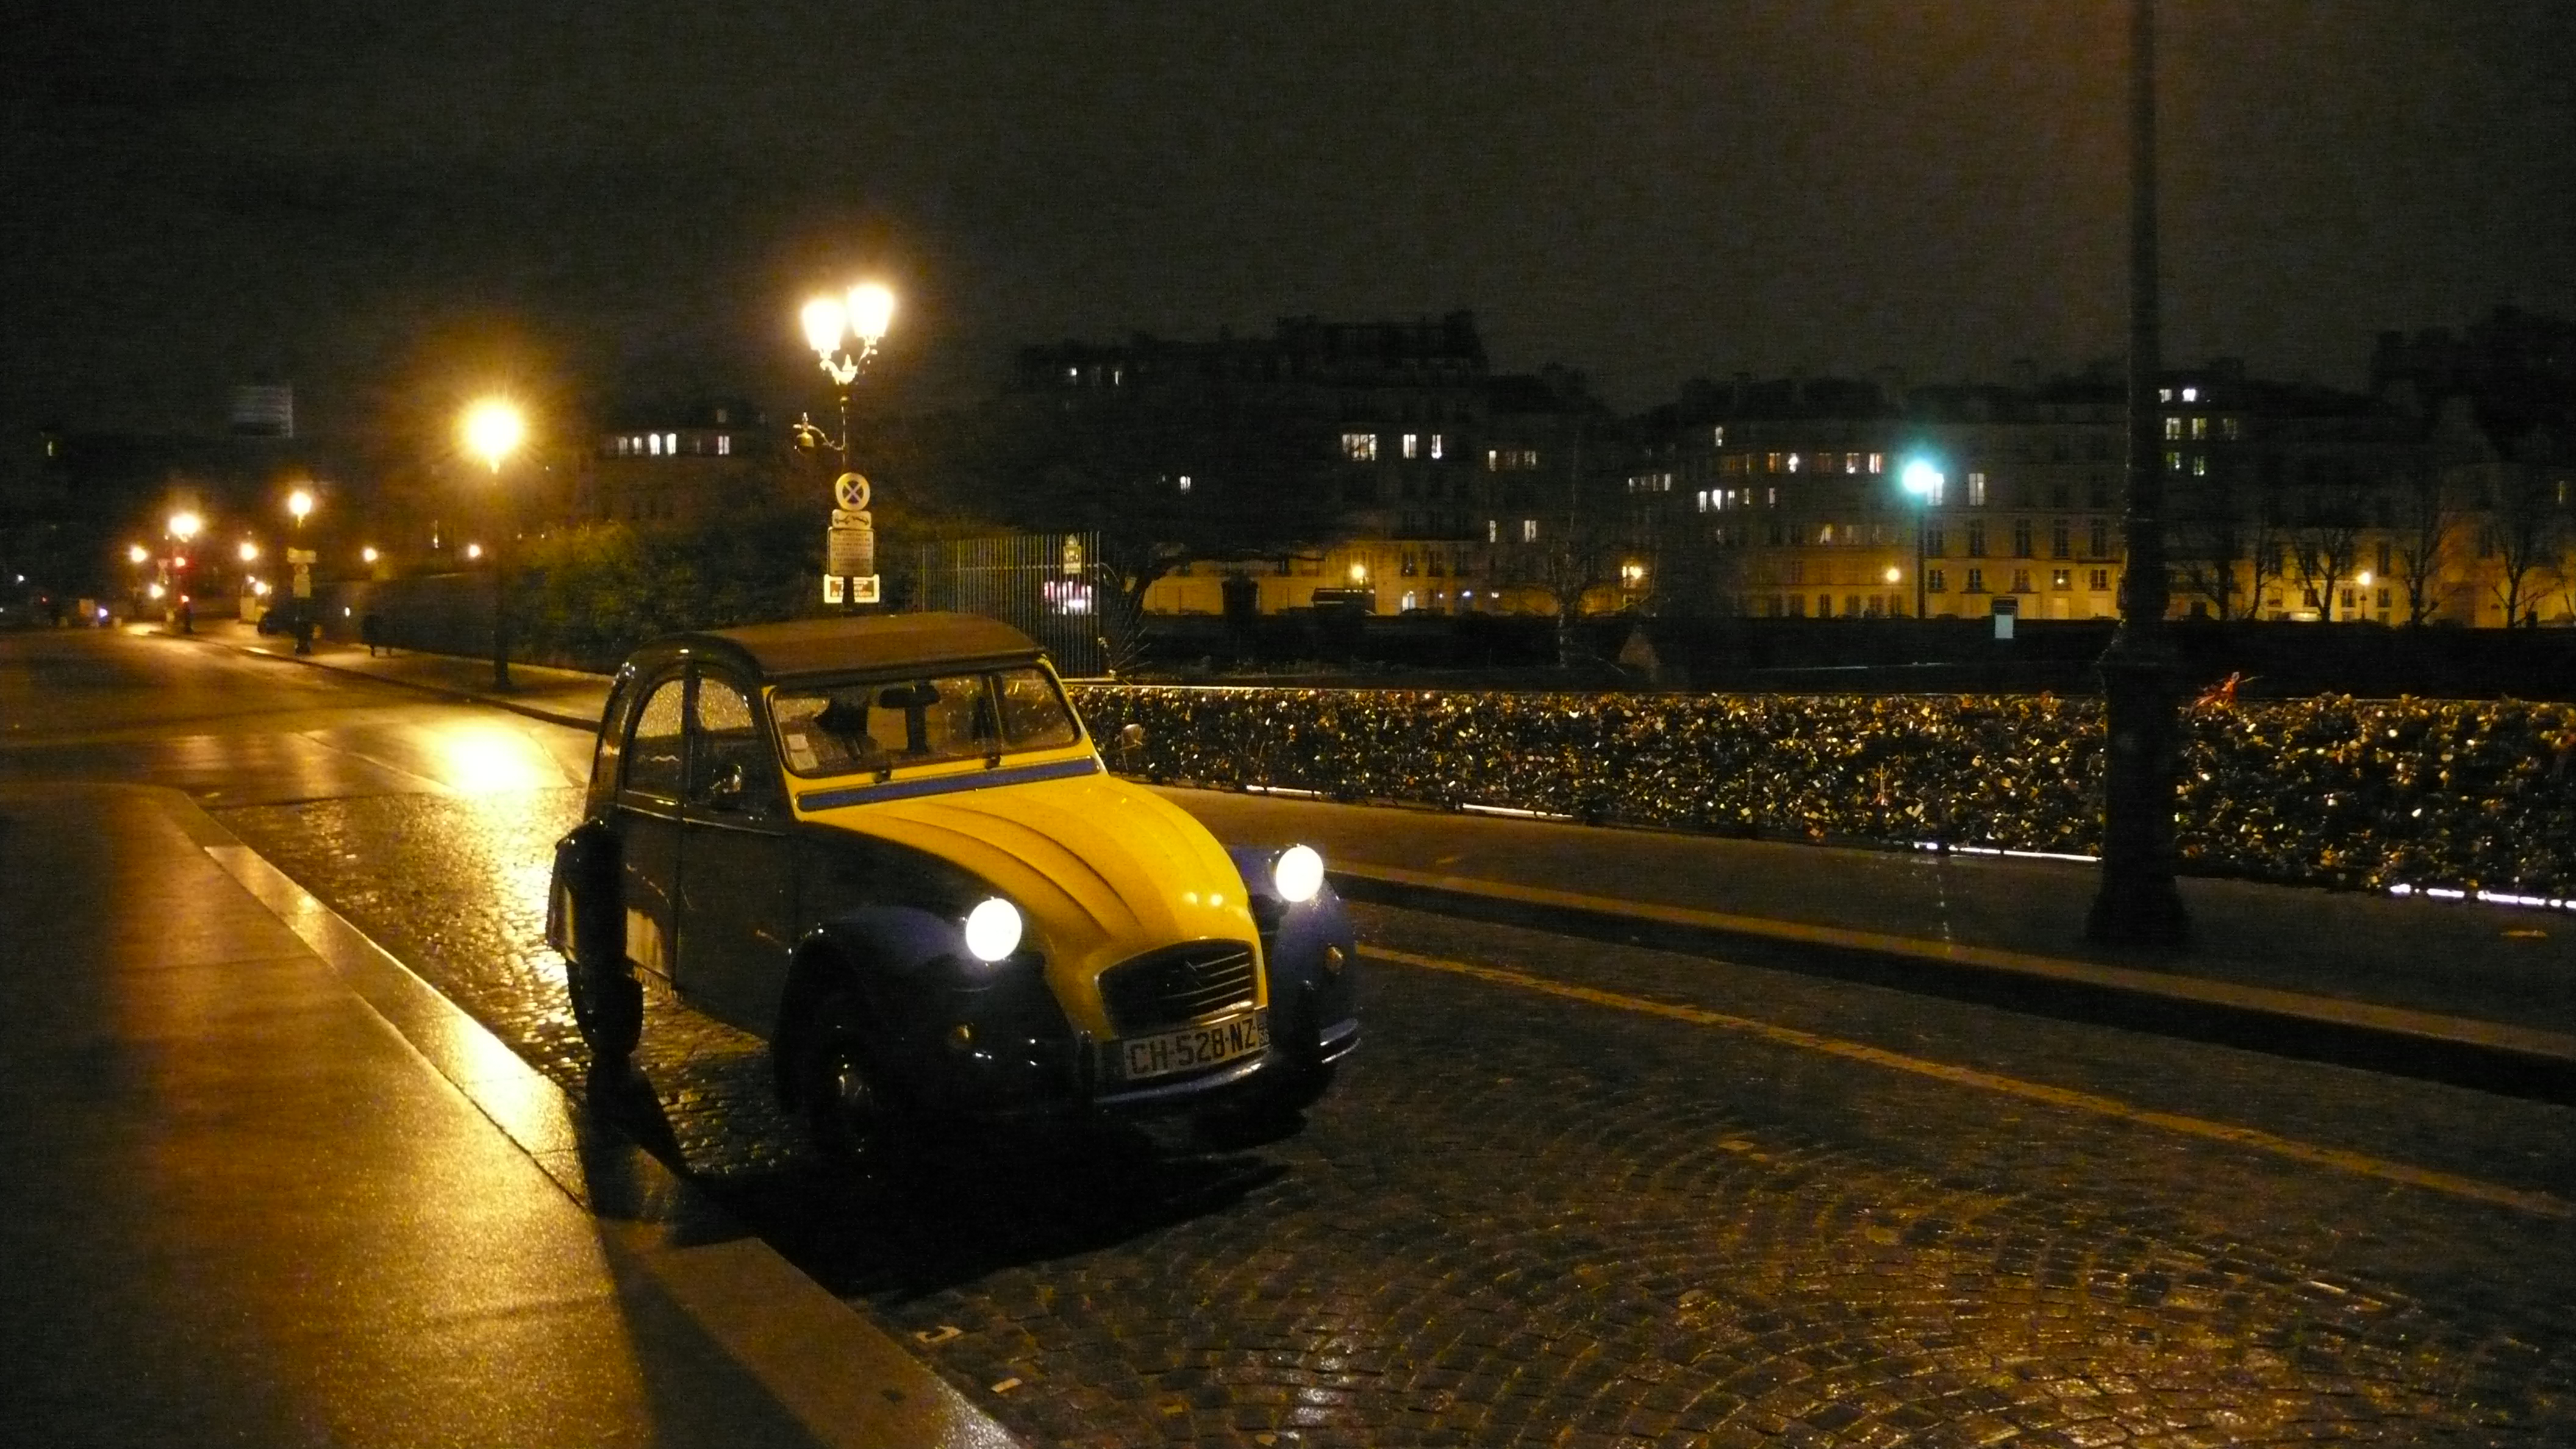 2CV Paris Tour - Visit Paris in a french 2CV! 2CV and Paris By Night